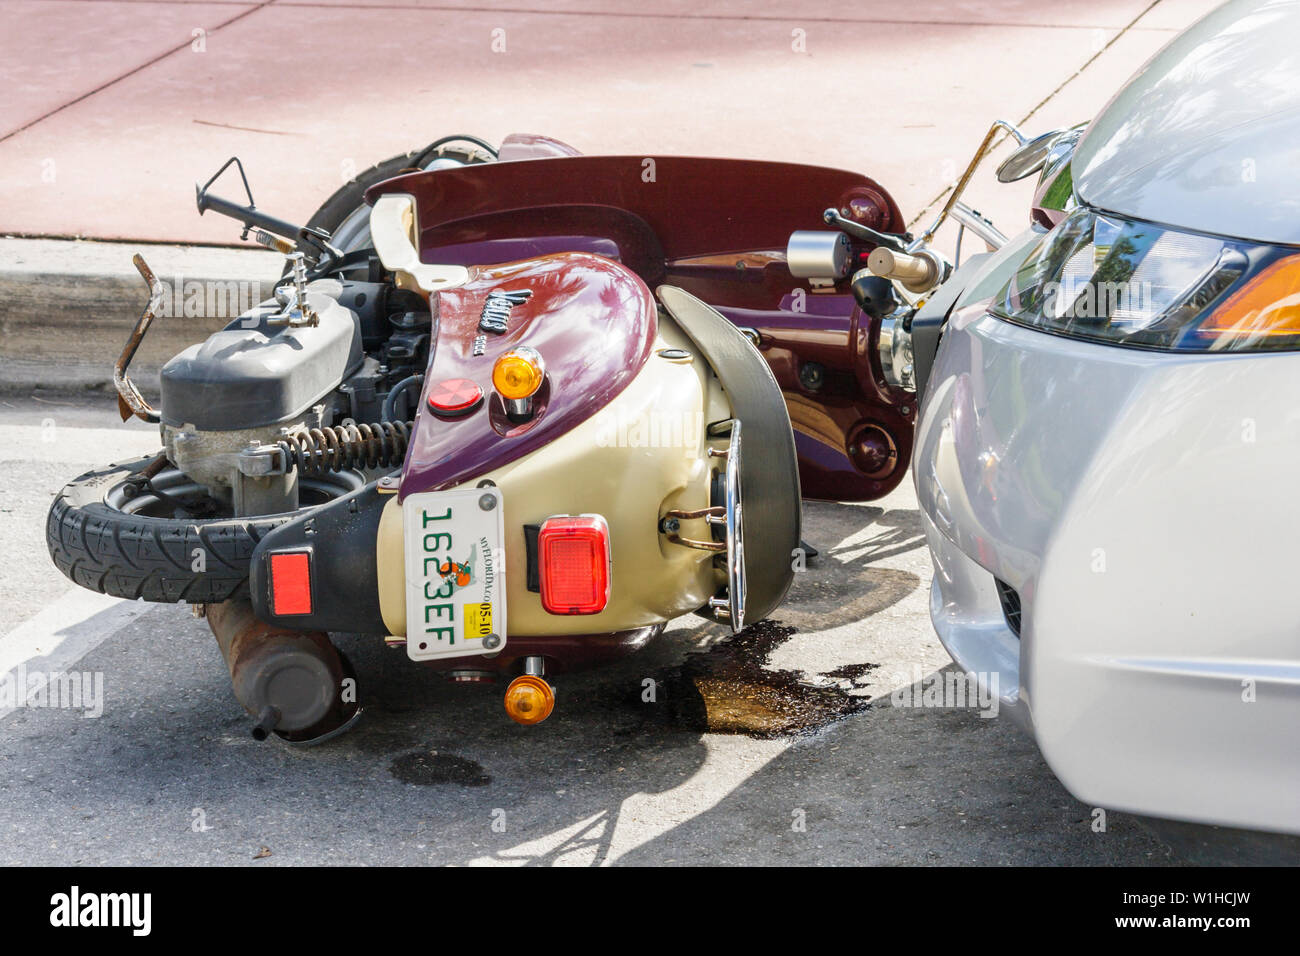 Car leaking -Fotos und -Bildmaterial in hoher Auflösung – Alamy